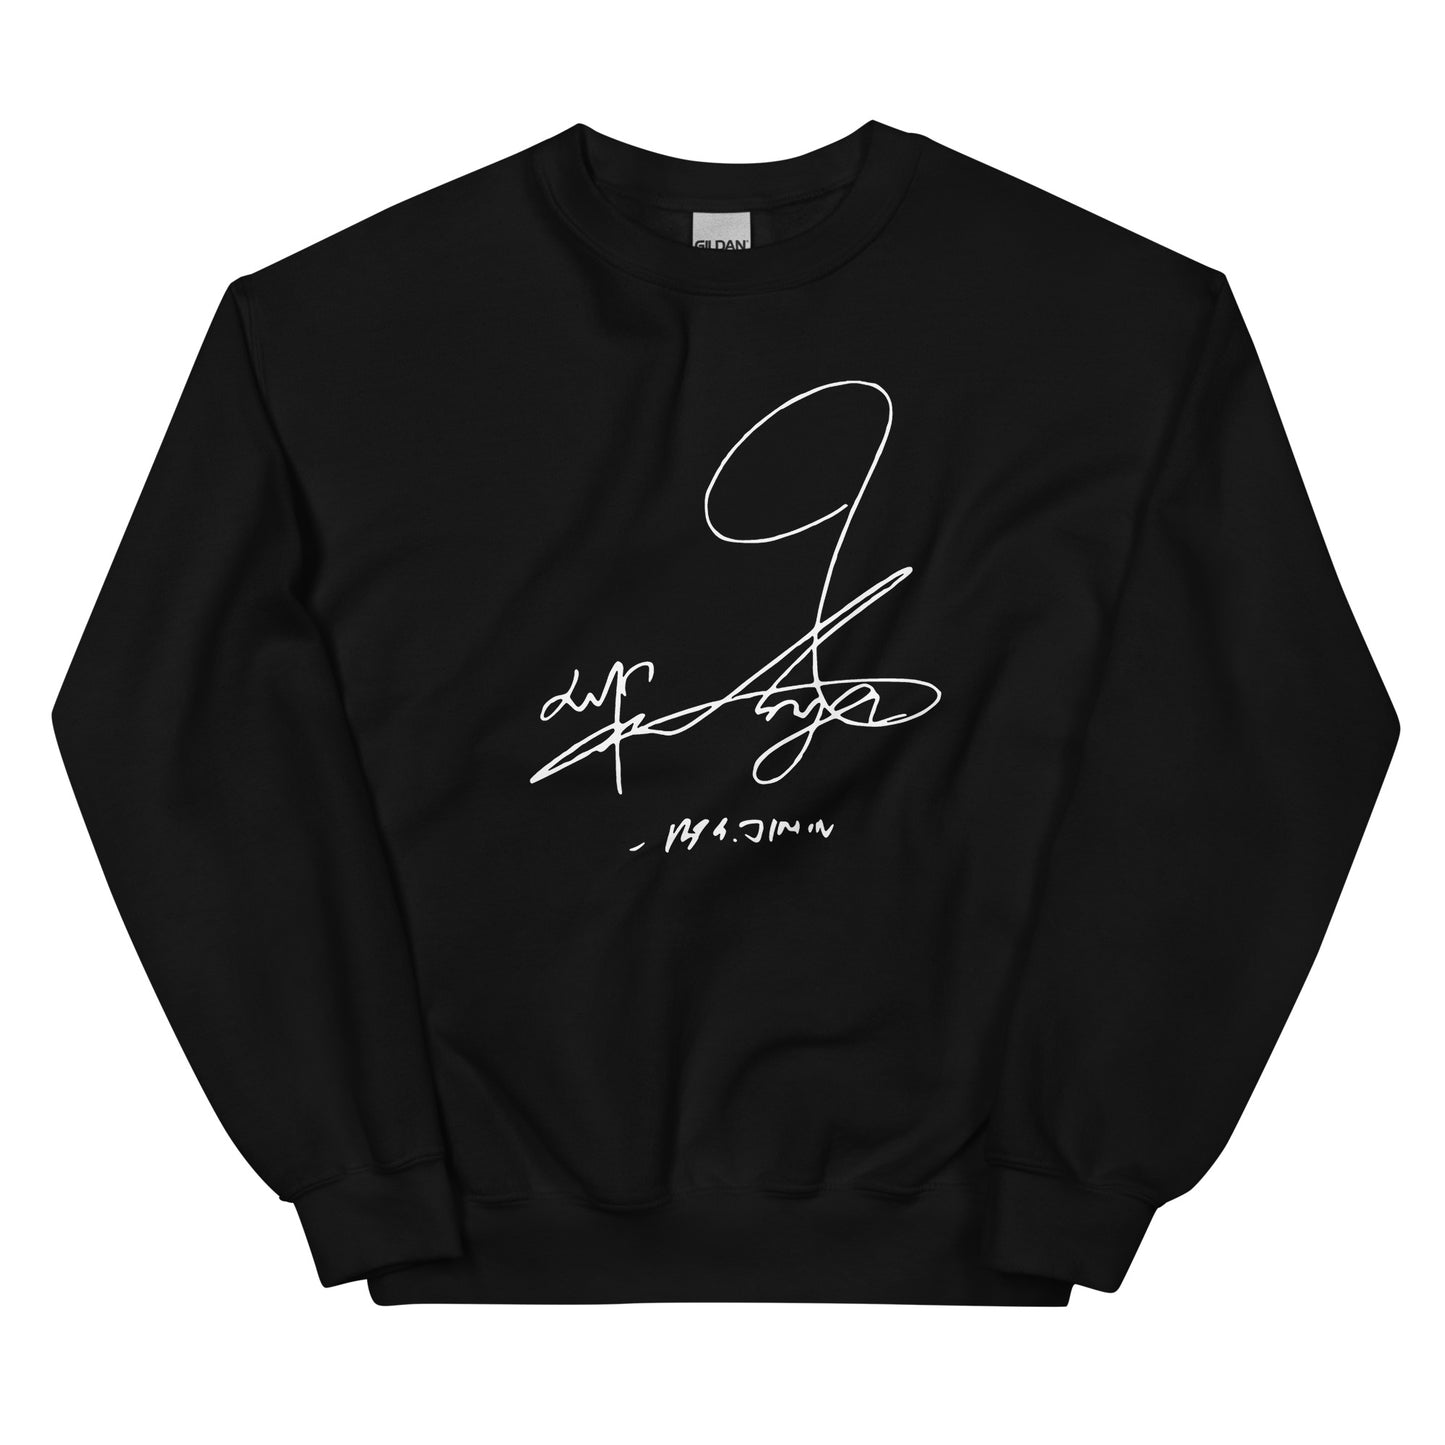 BTS Jimin, Park Ji-min Autograph Unisex Sweatshirt